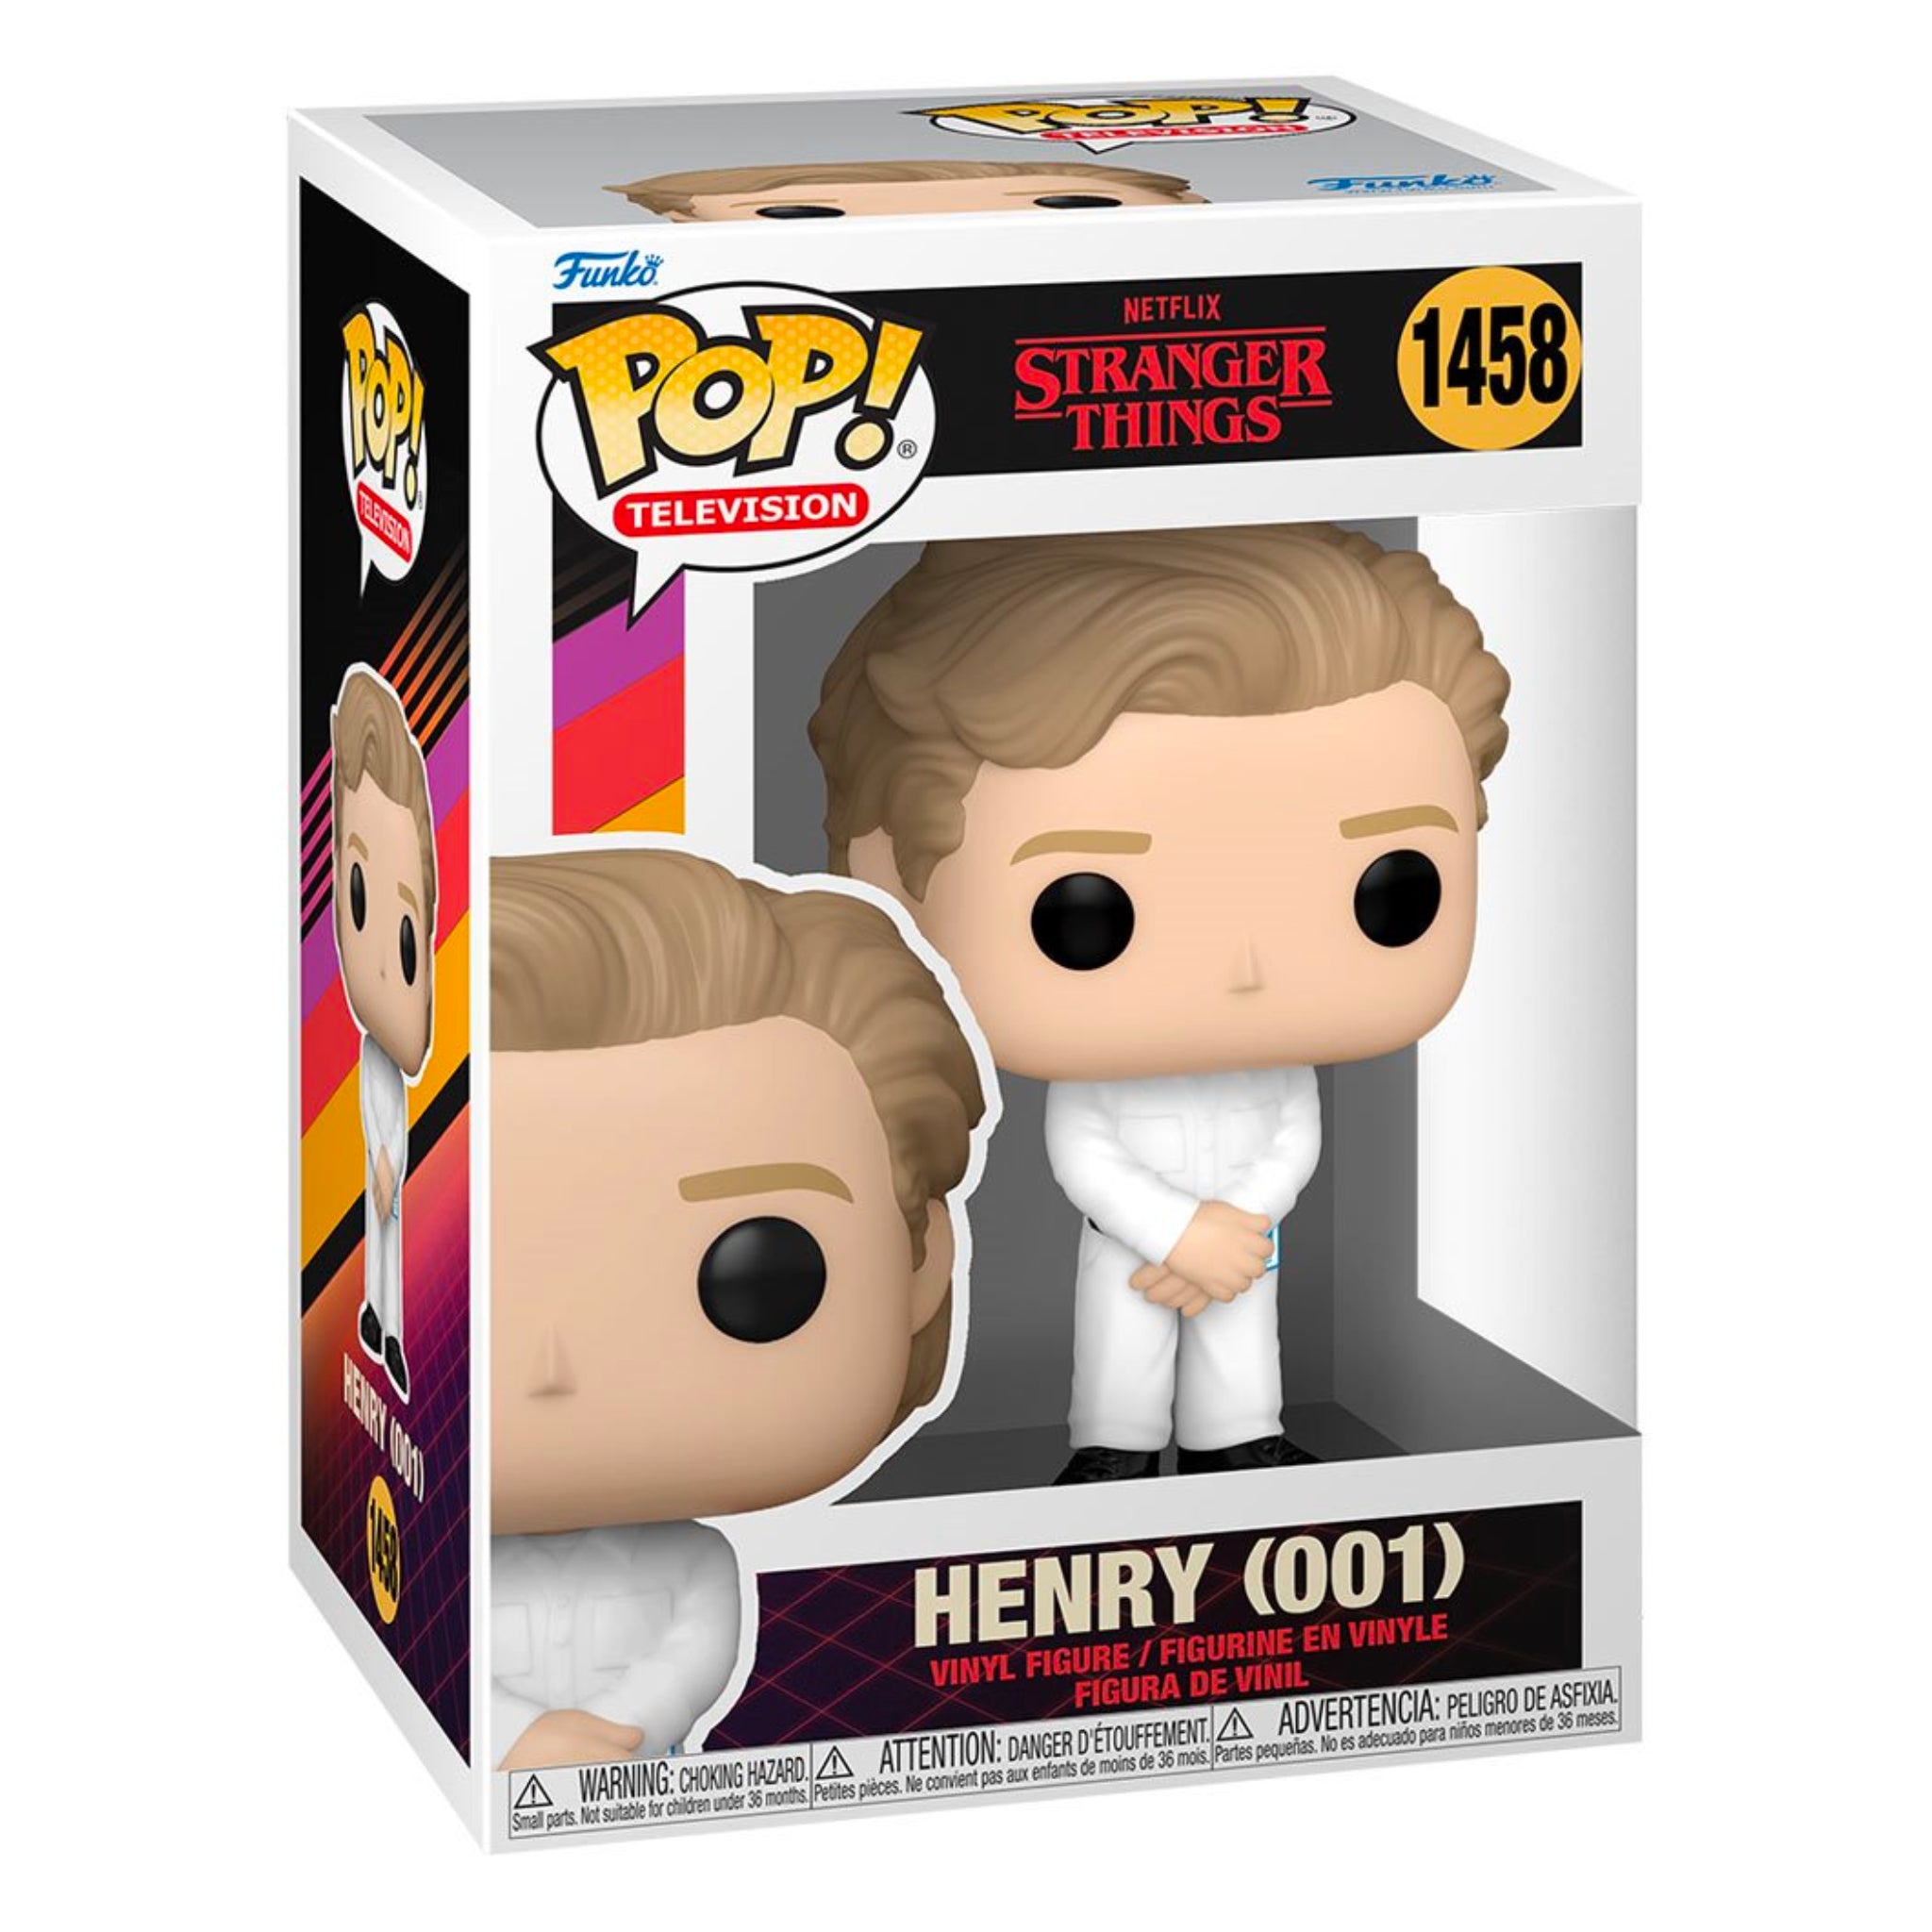 Henry (001) Funko Pop!